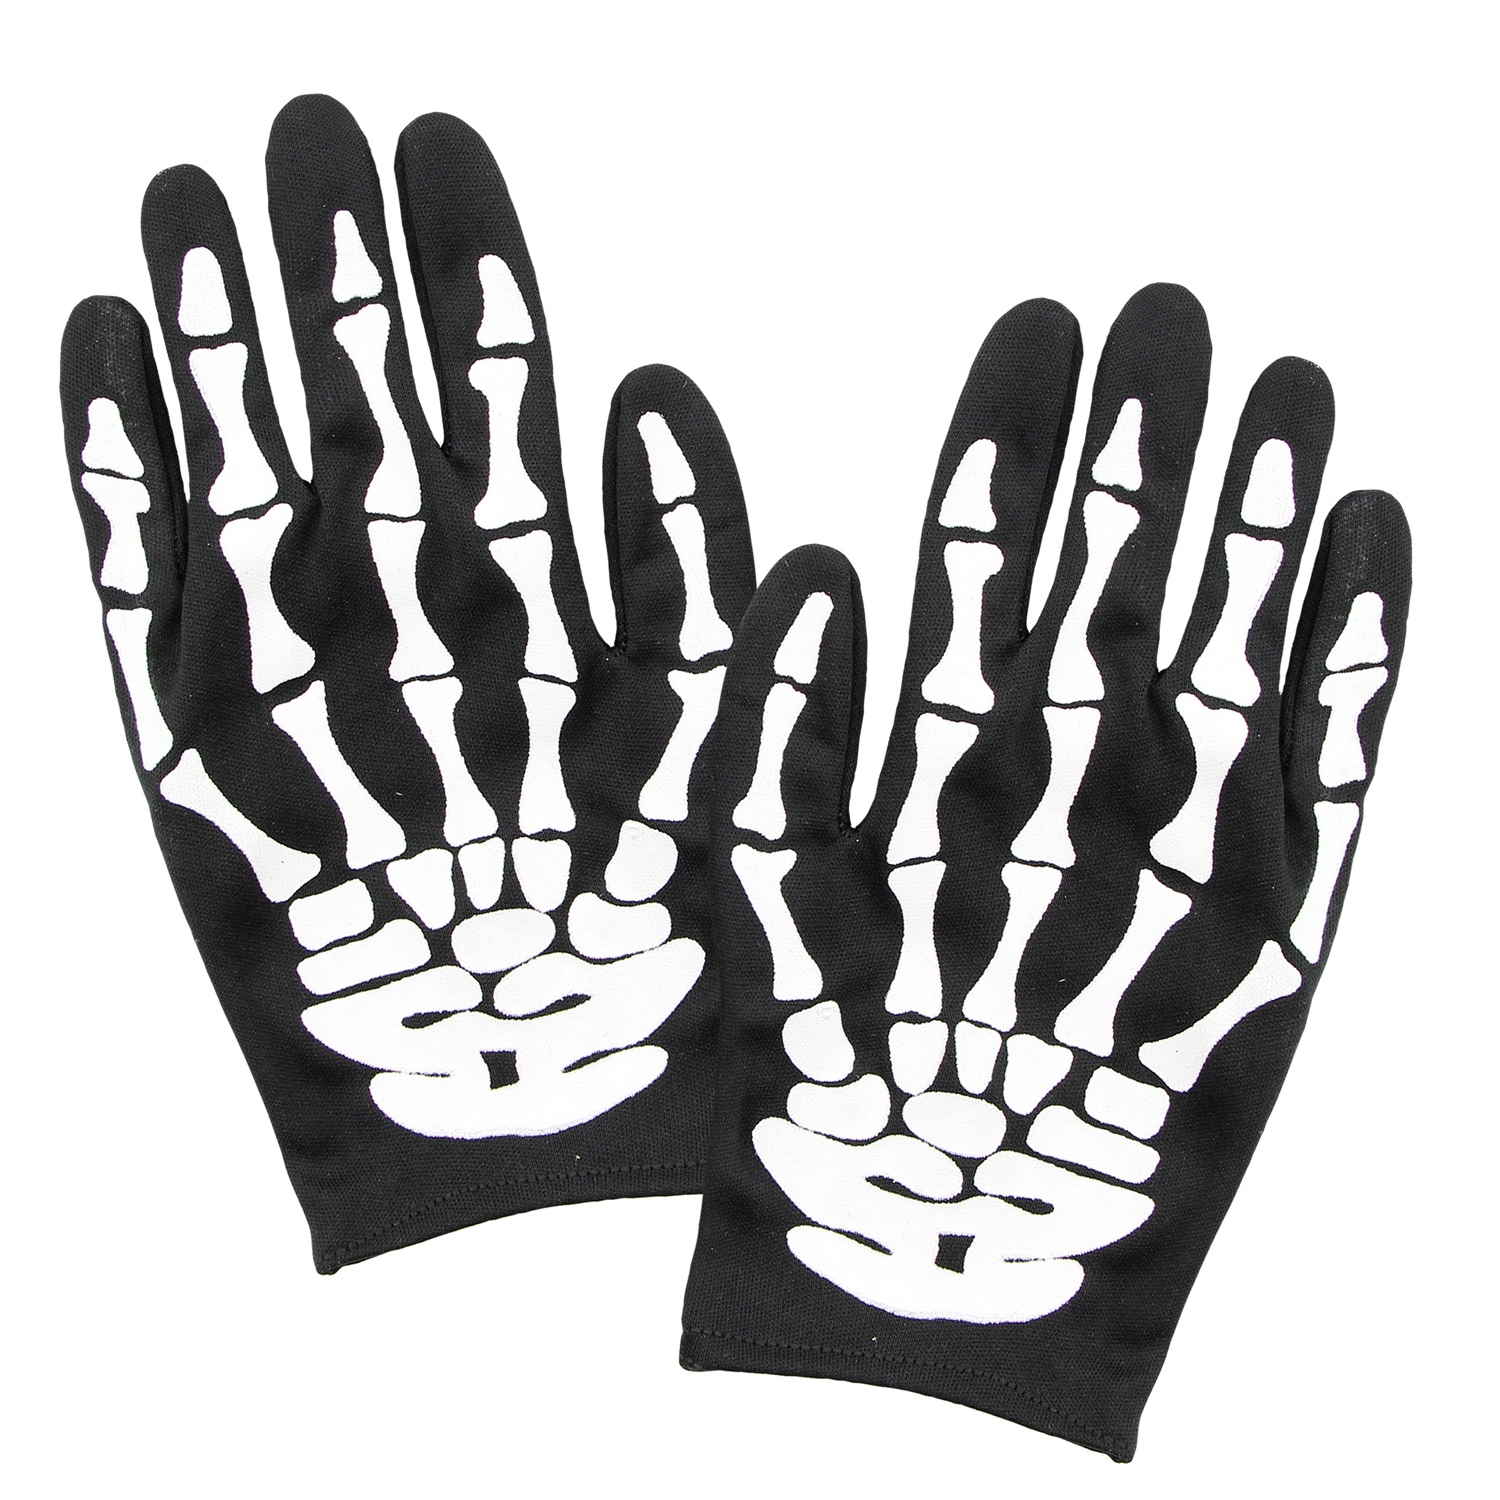 NEU Skelett-Handschuhe Erwachsenengröße, 2 Stück